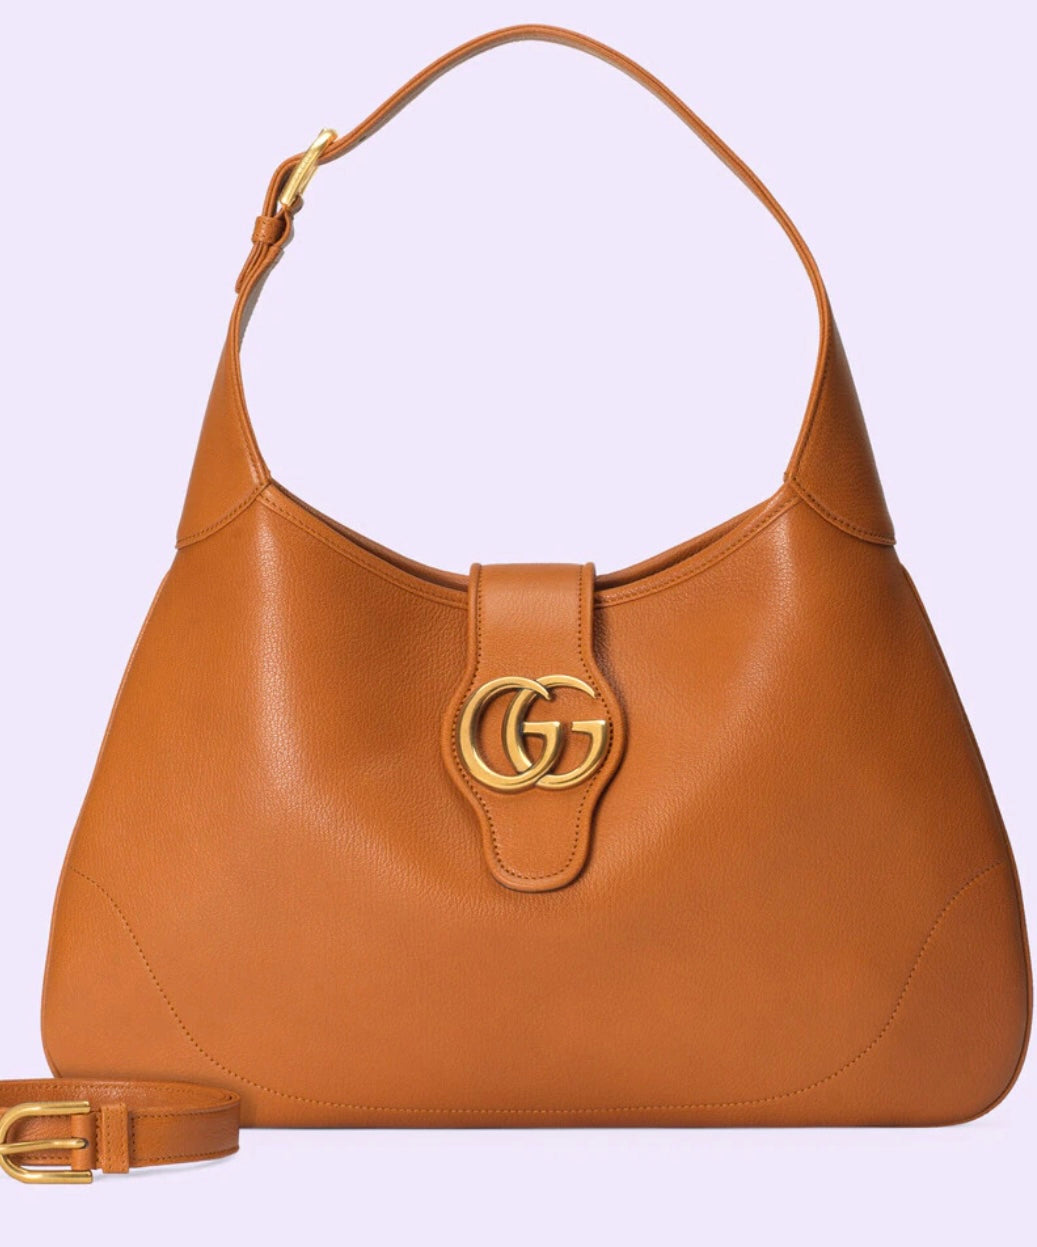 Fashion brown tan leather handbag shoulder bag